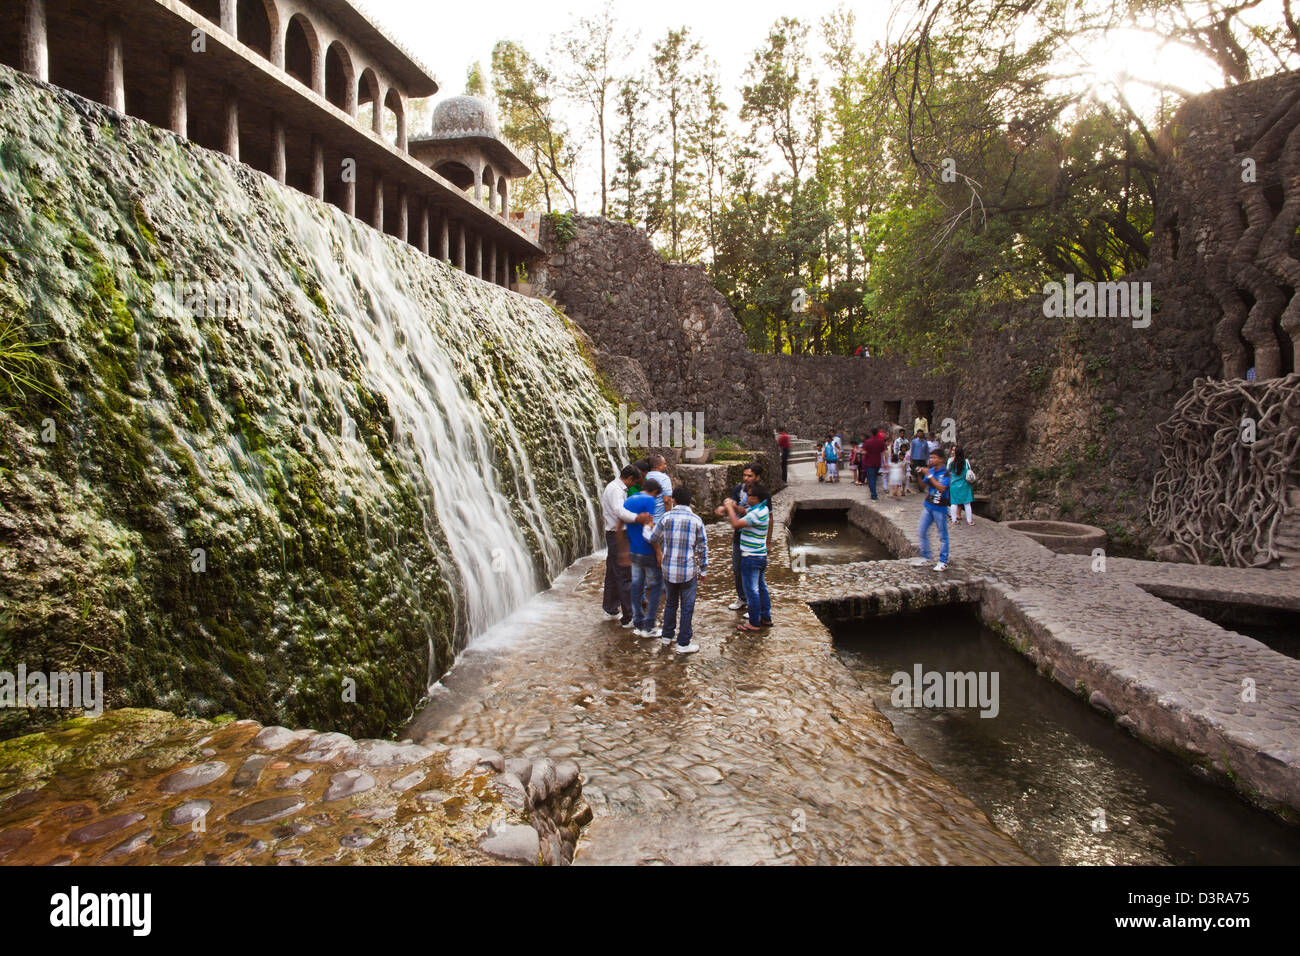 People enjoying in a waterfall at Rock garden by Nek Chand Saini, Rock Garden of Chandigarh, India Stock Photo